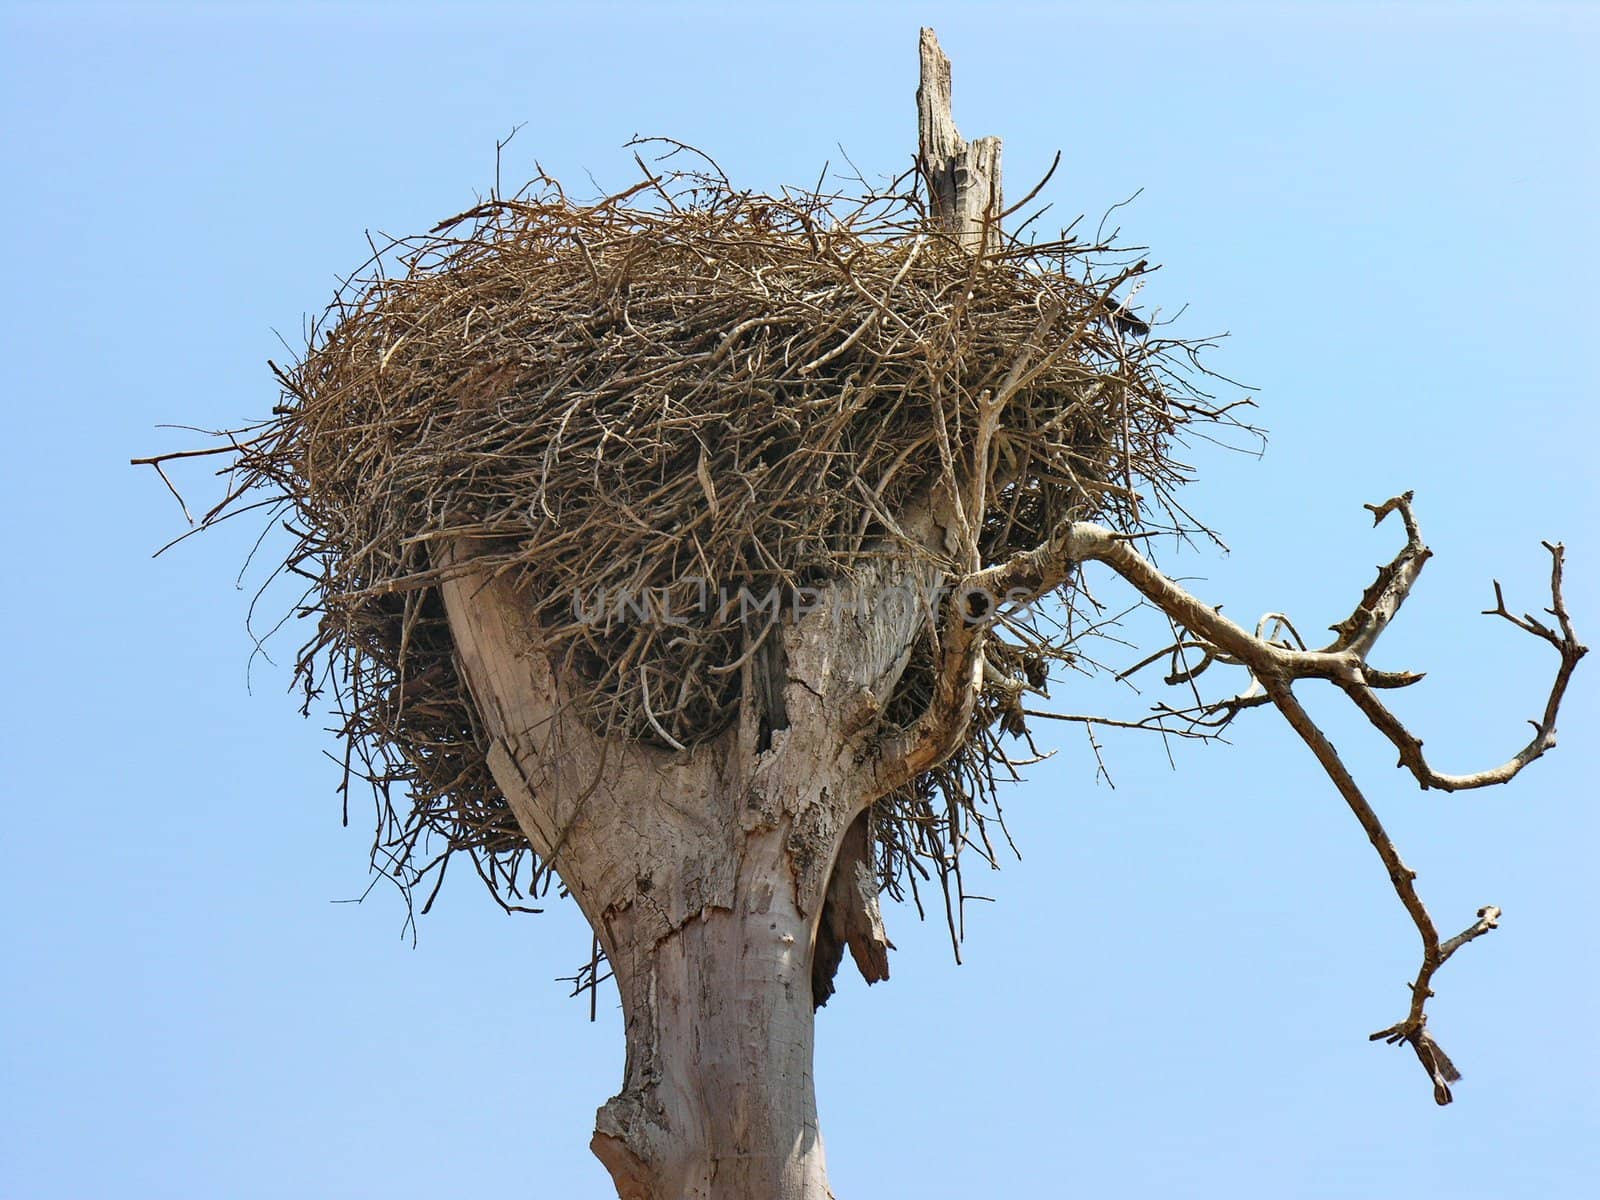 Stork nest on a dead tree in Morocco